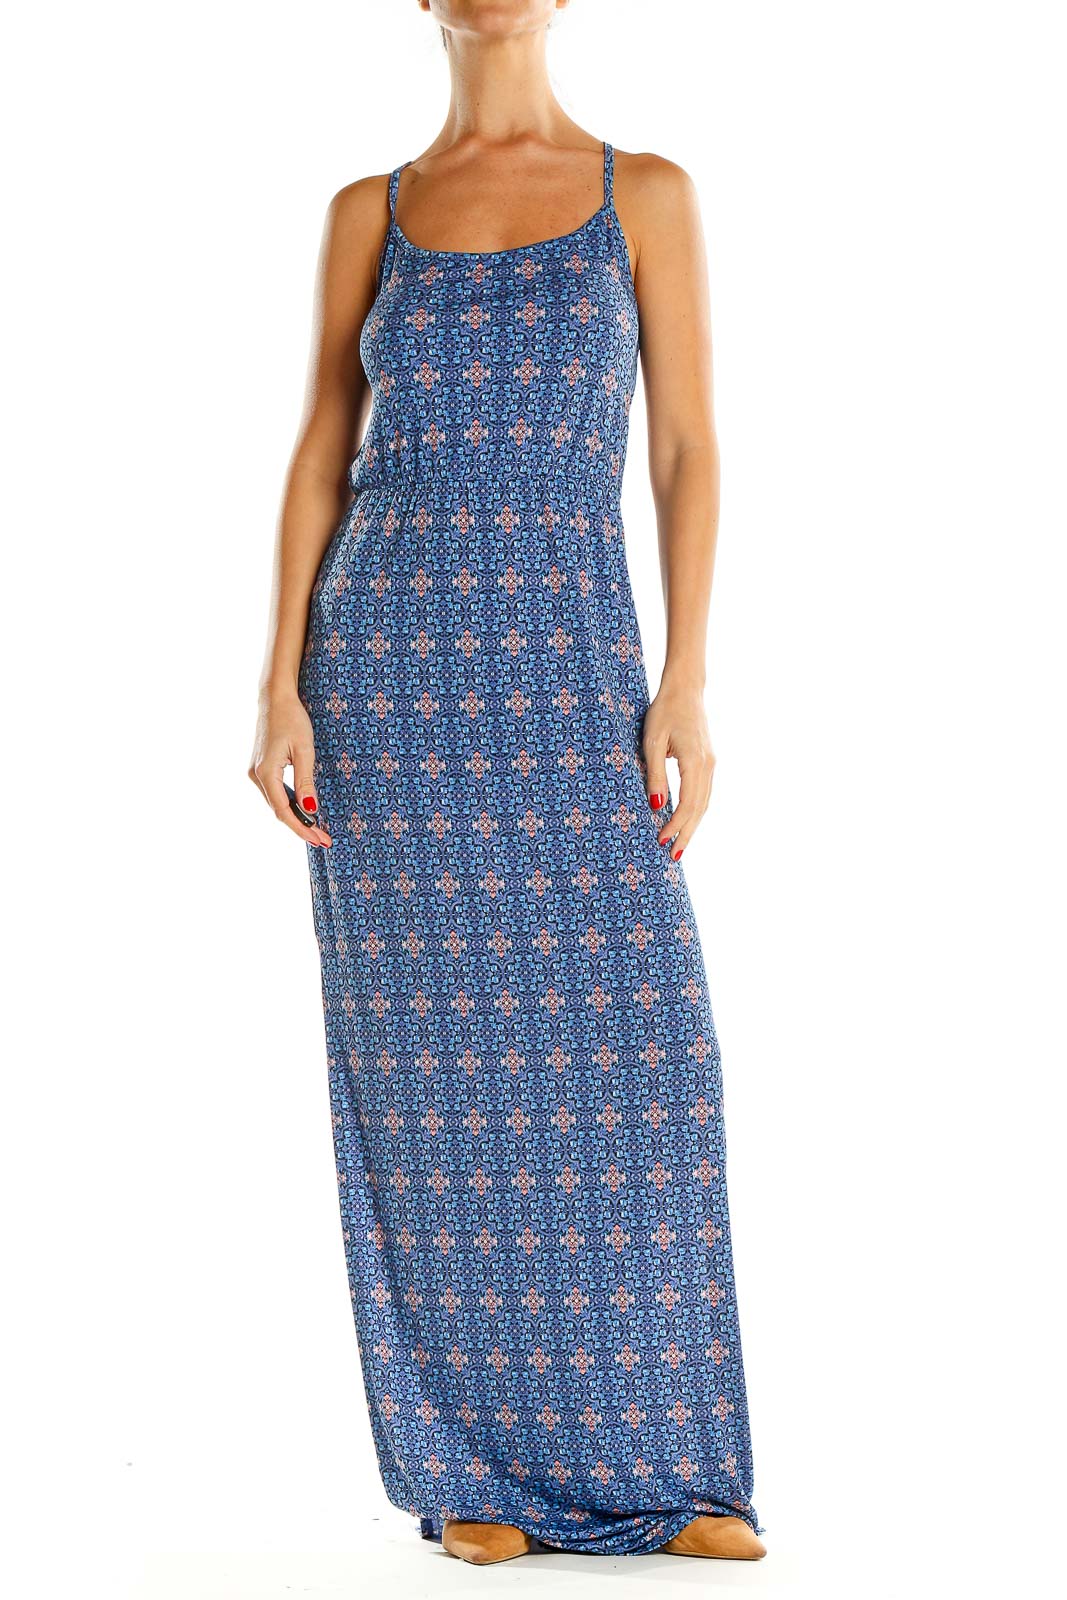 Blue Geometric Print Holiday Column Dress Front